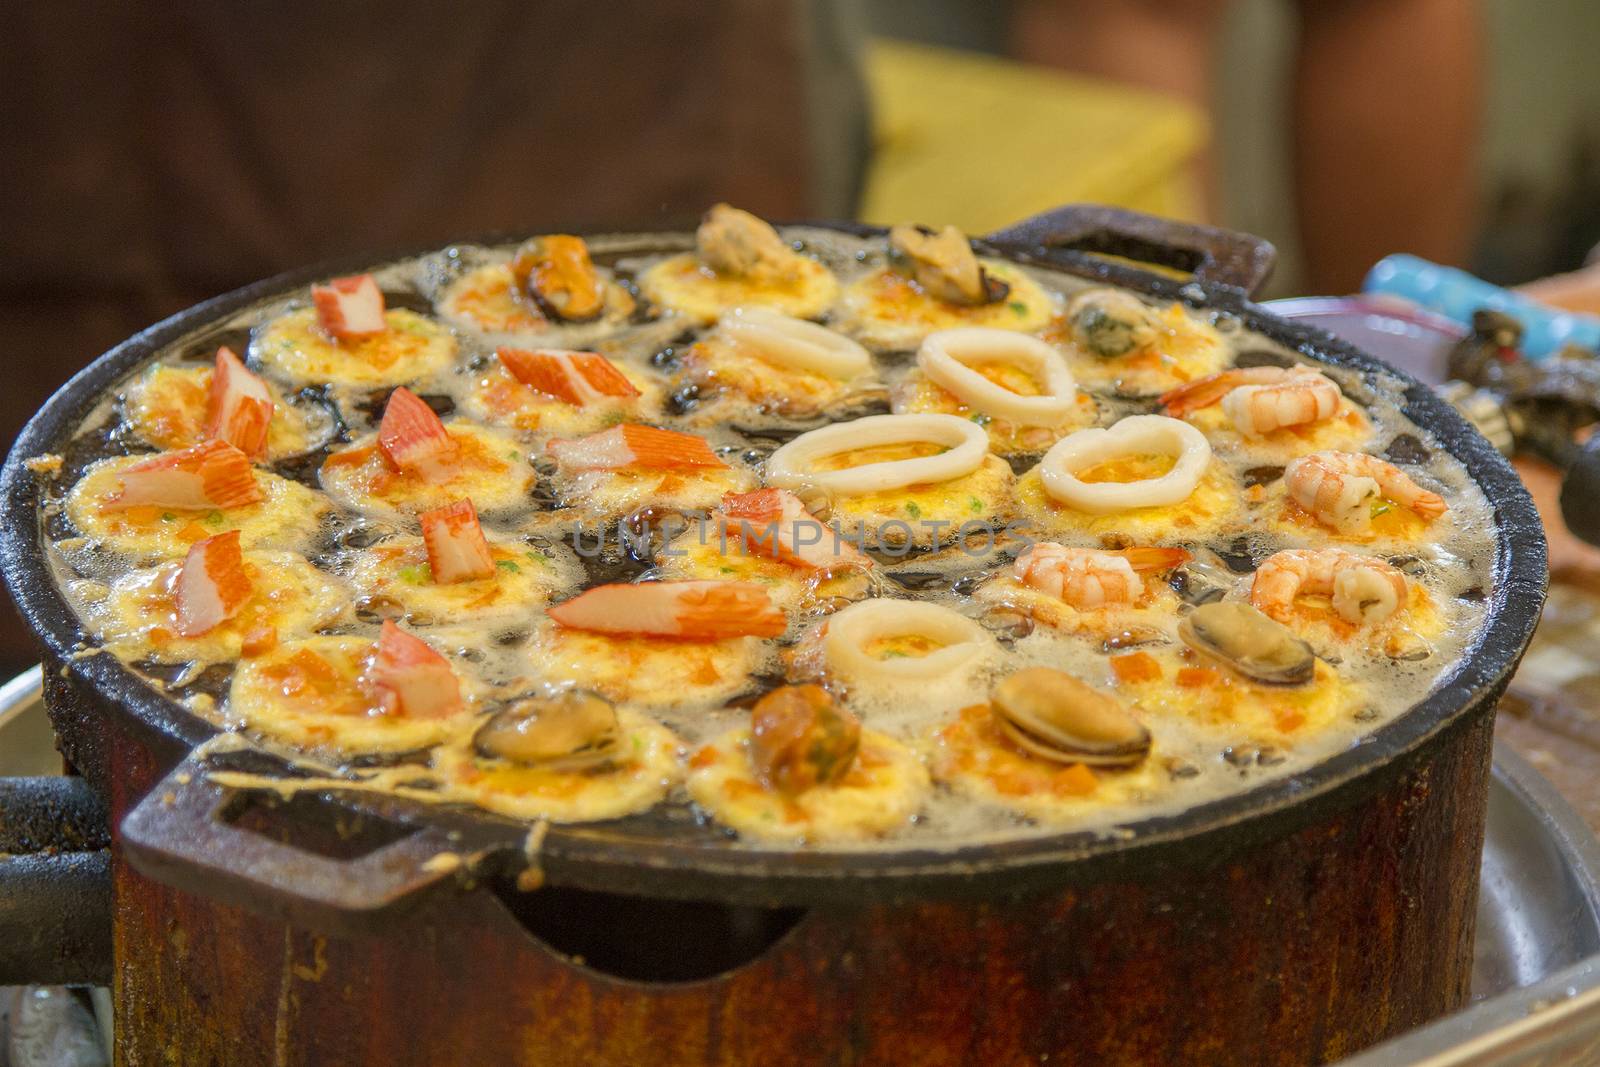 Thai-style takoyaki with mussels by TakerWalker